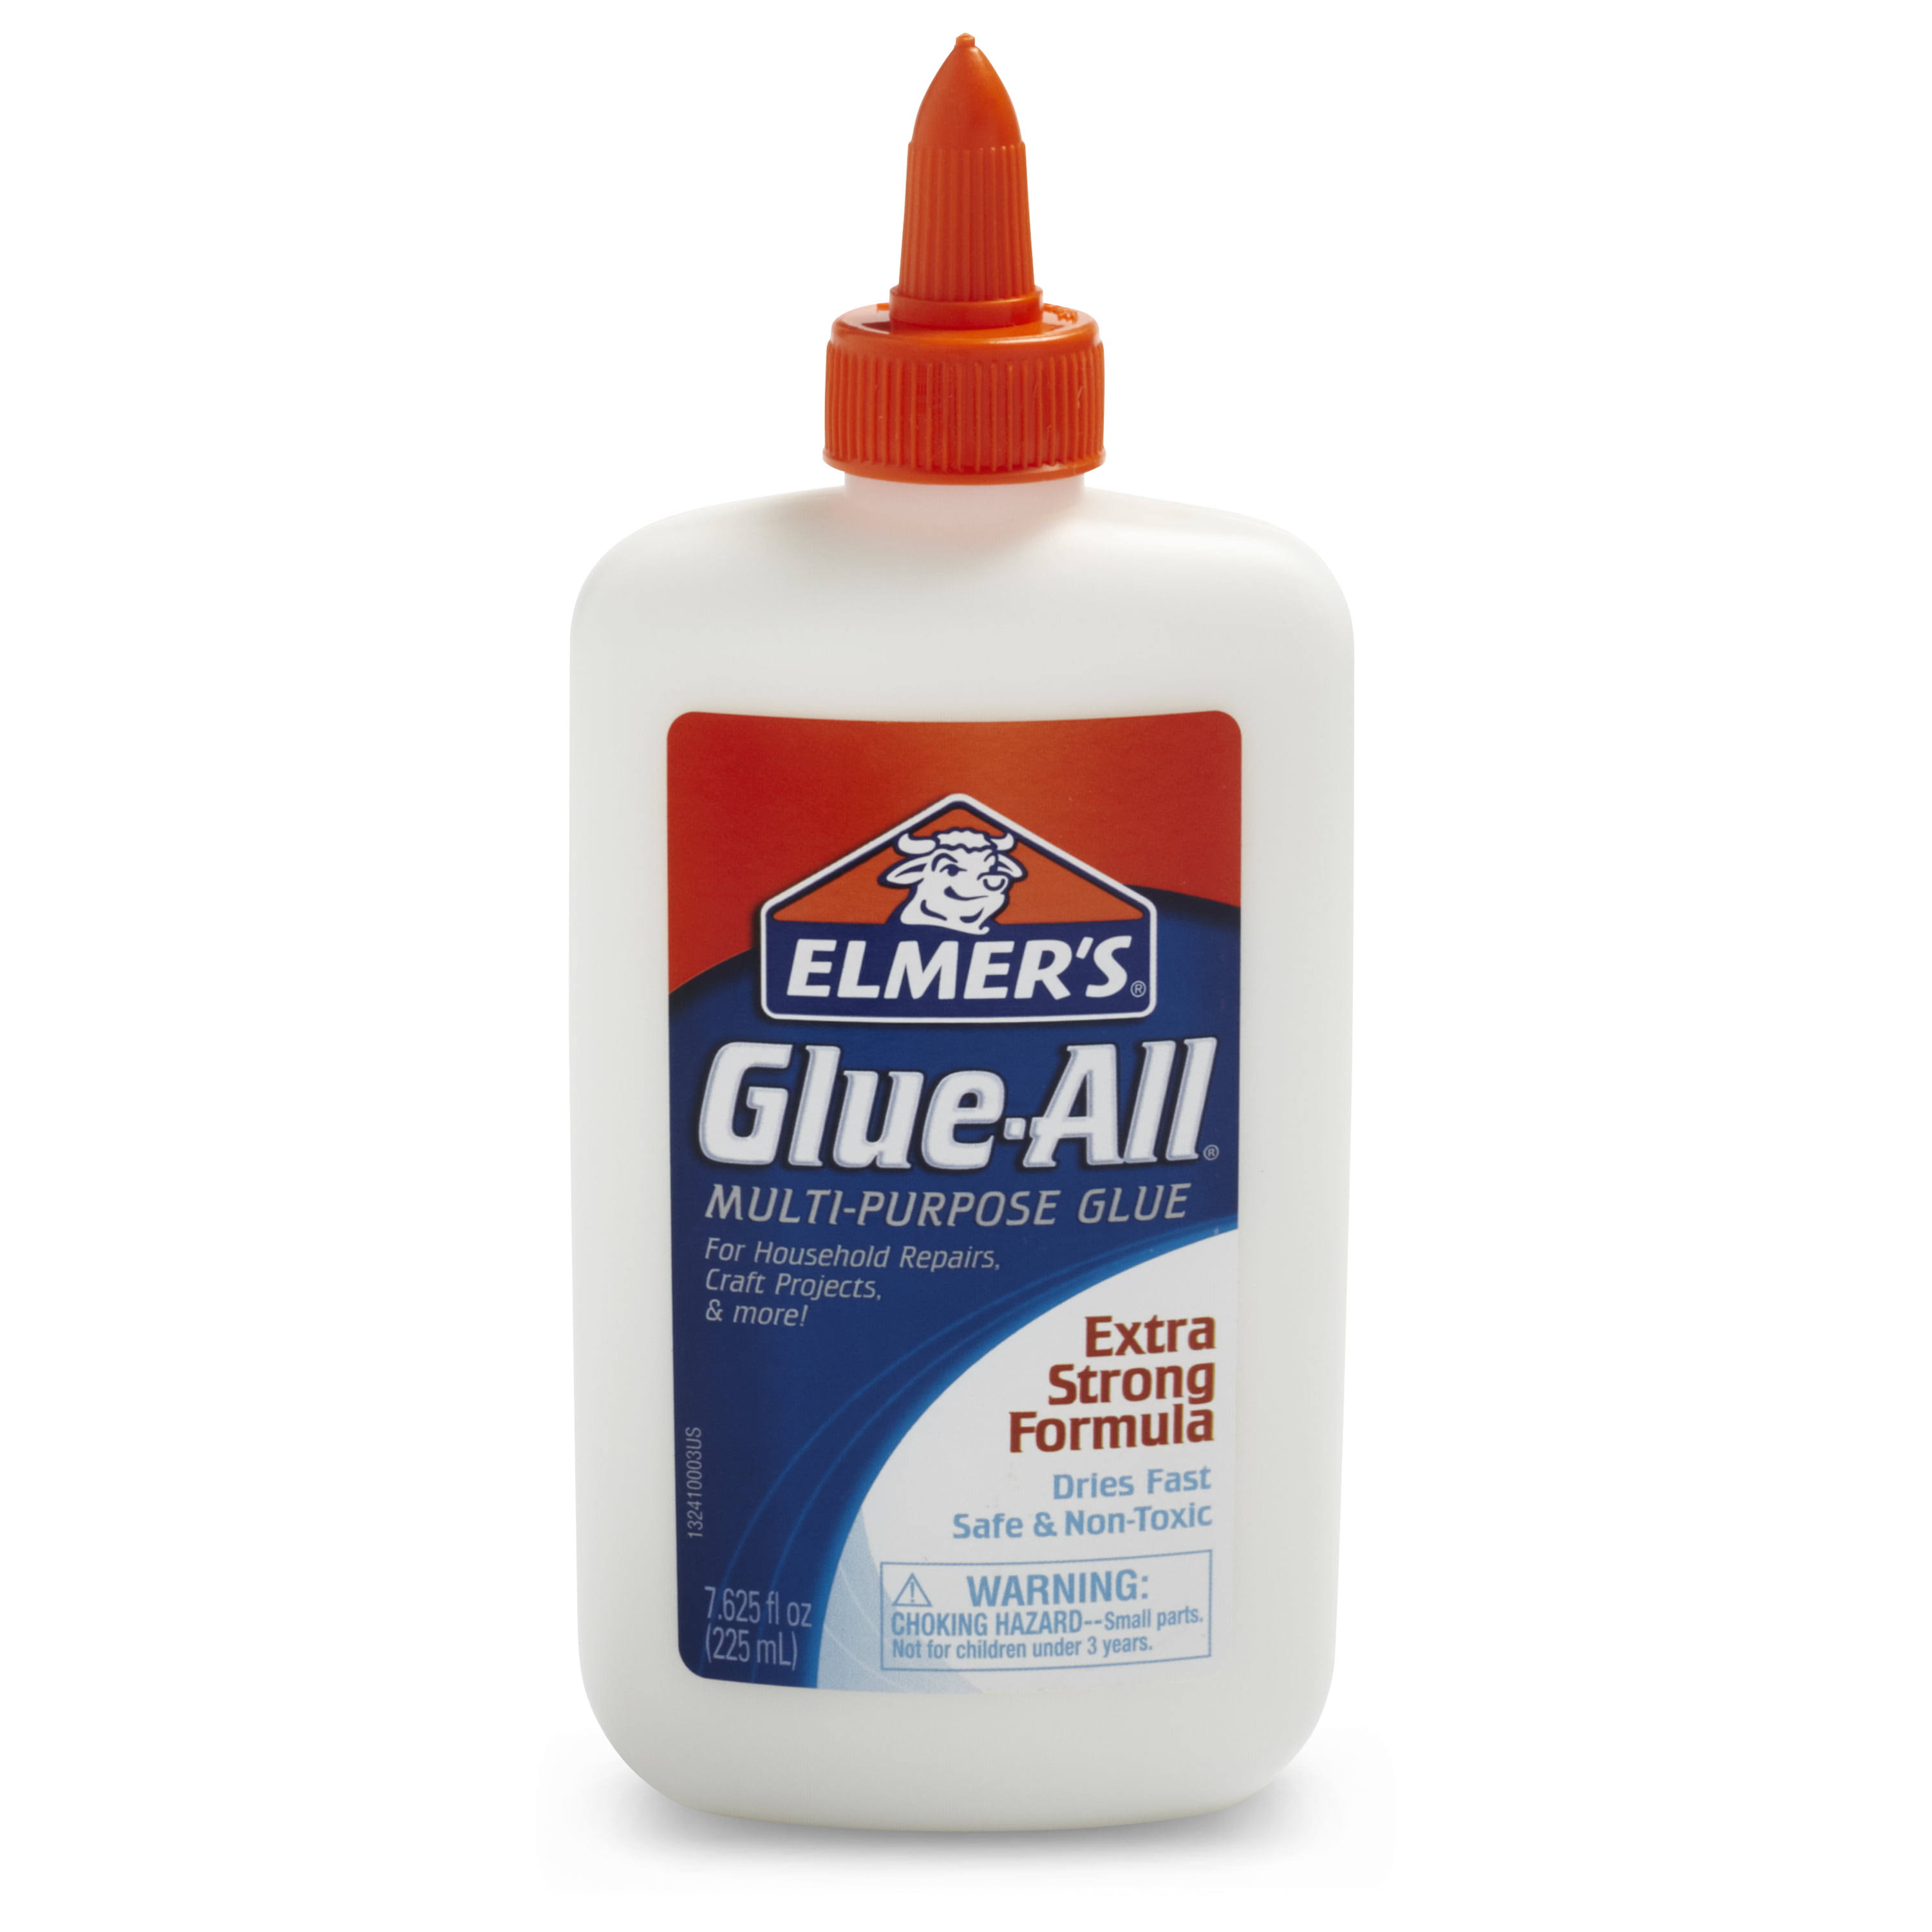 Elmer's Glue-All Multi-Purpose Glue - 225ml, Extra Strong